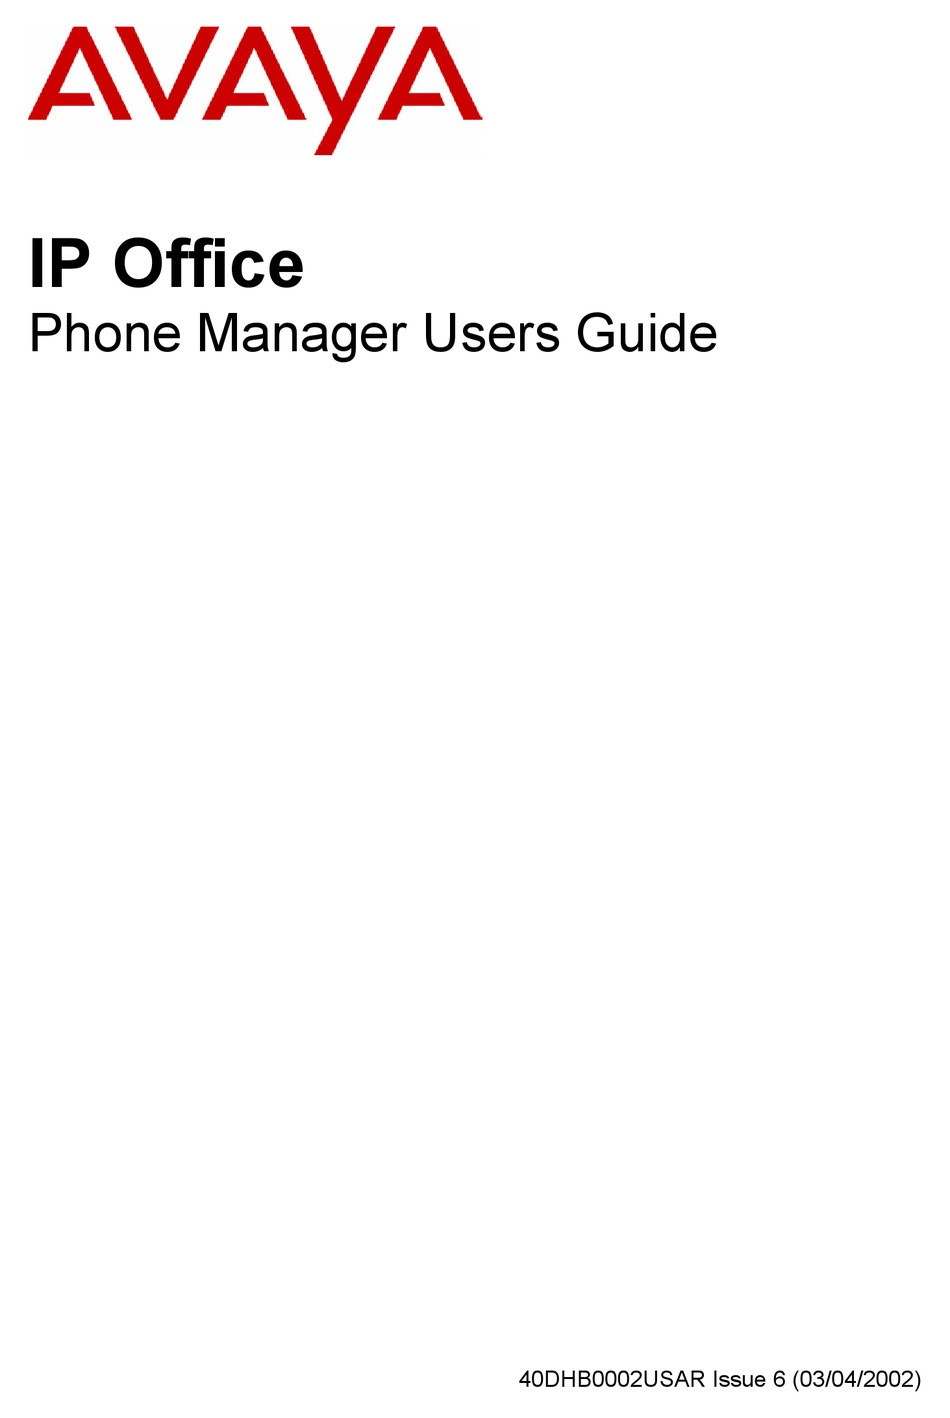 AVAYA IP OFFICE PHONE MANAGER USER MANUAL Pdf Download | ManualsLib